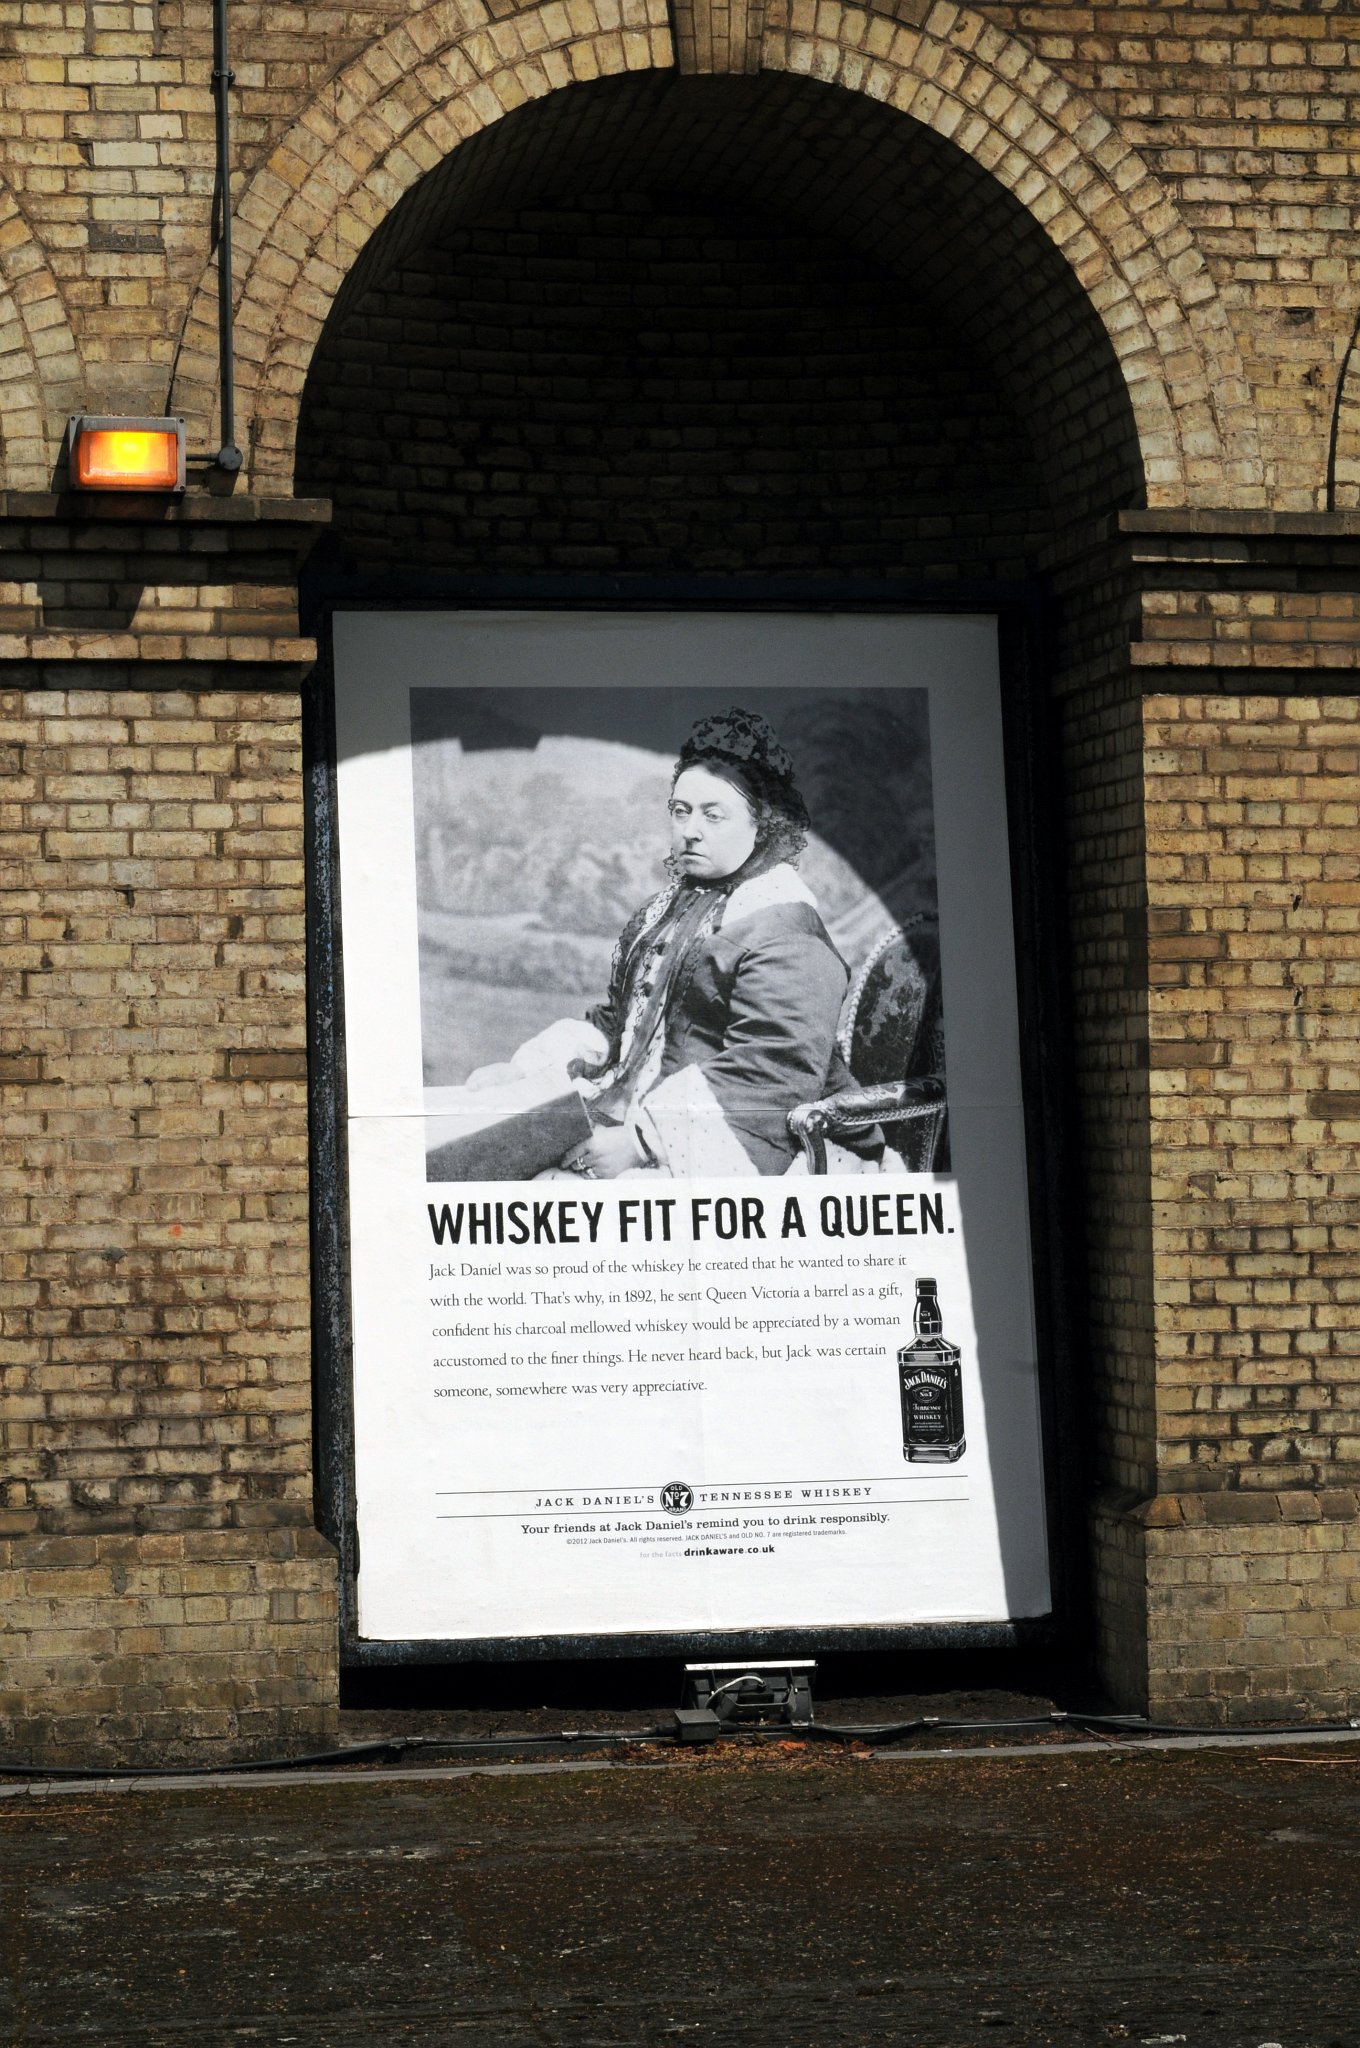 DSC_7948_1.jpg - Reklama na whisky...